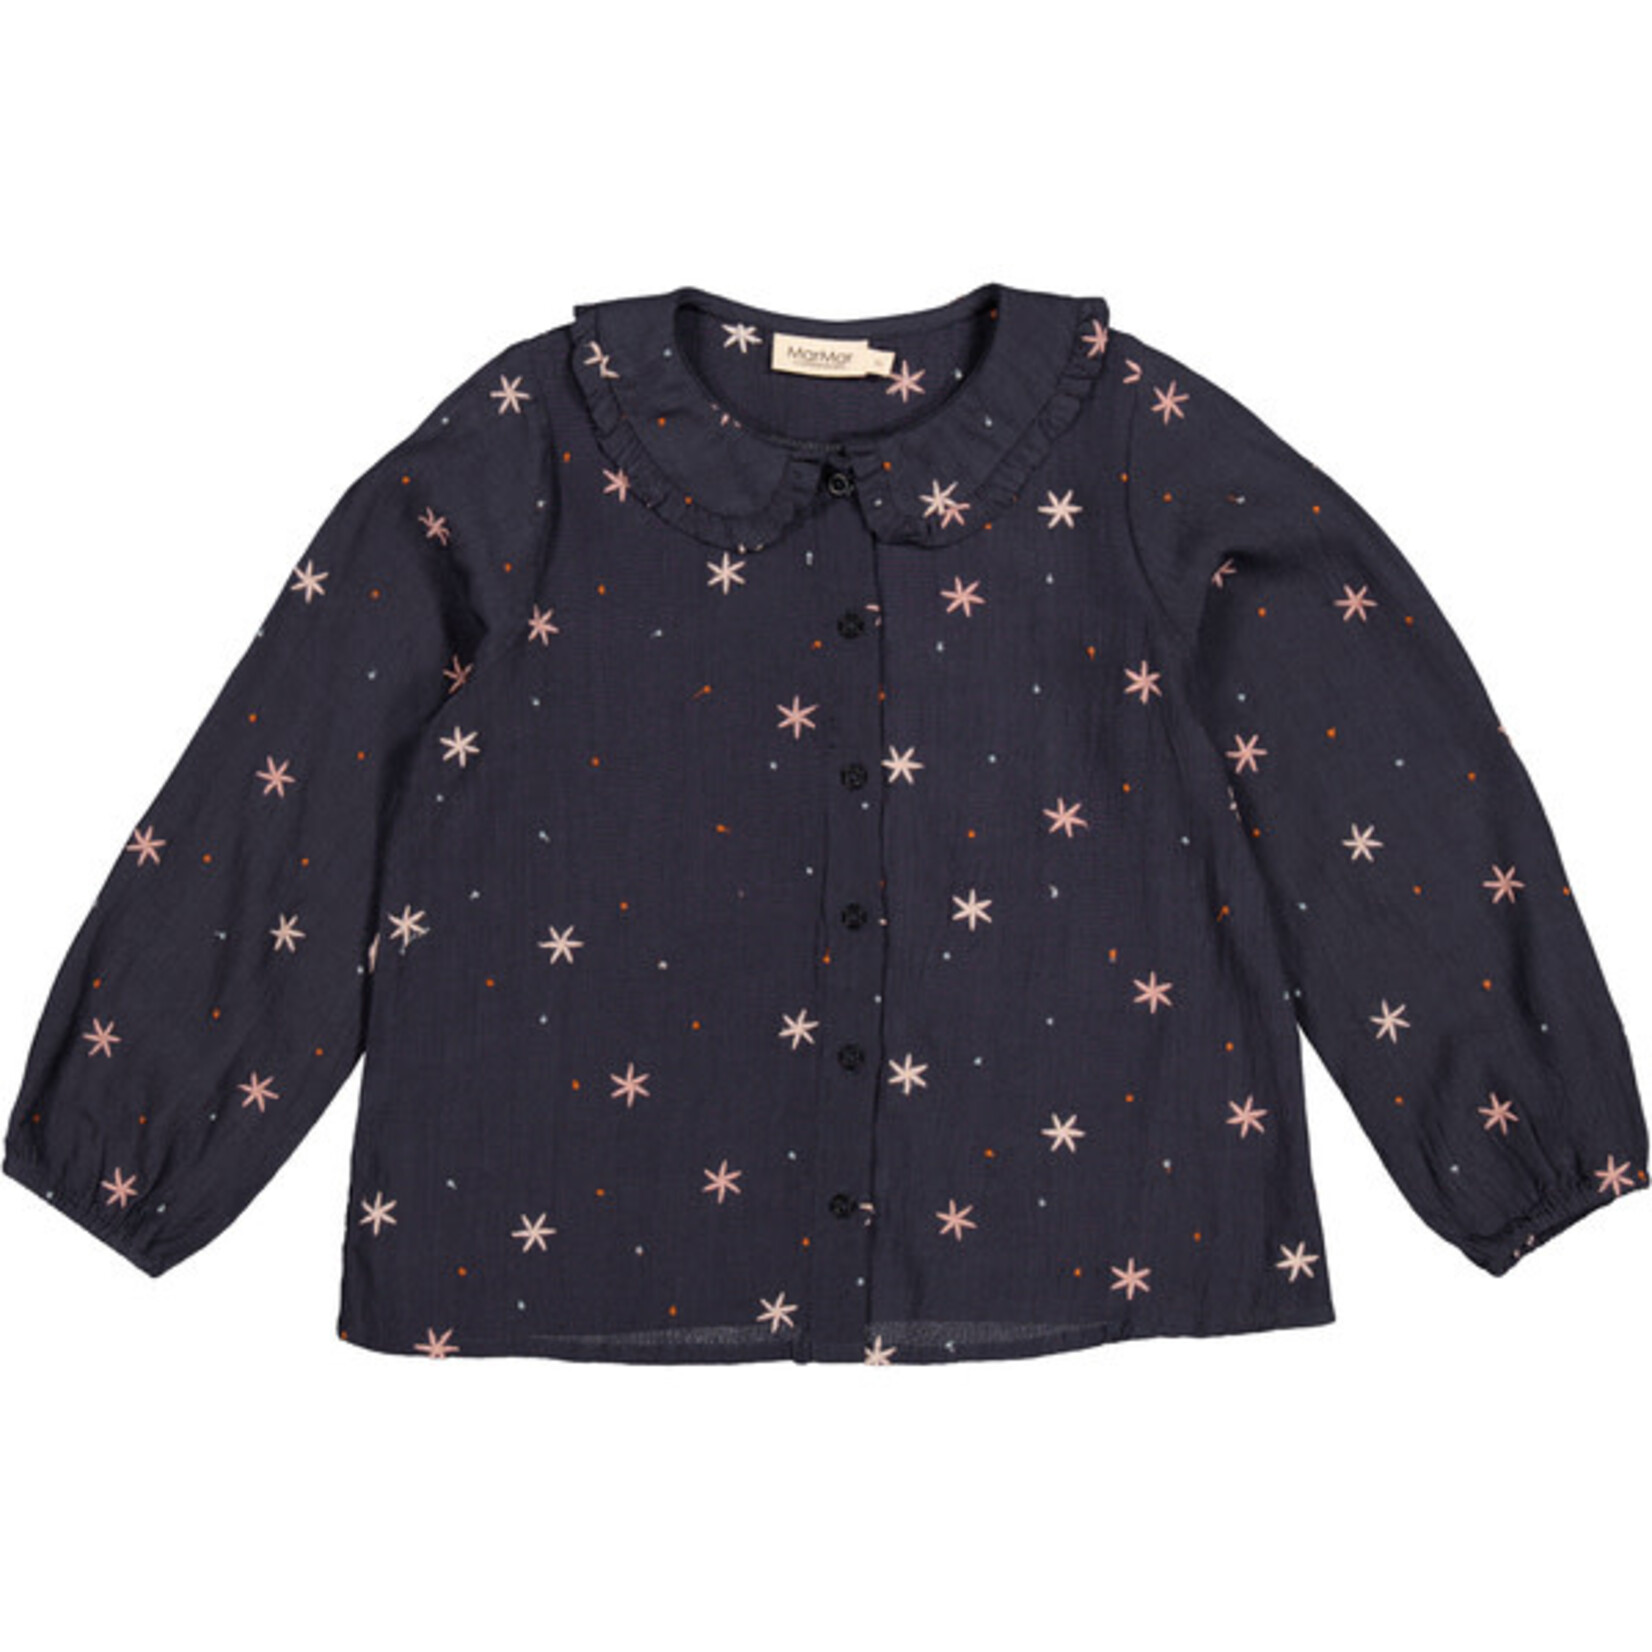 marmar Talin blouse - stars embroidery